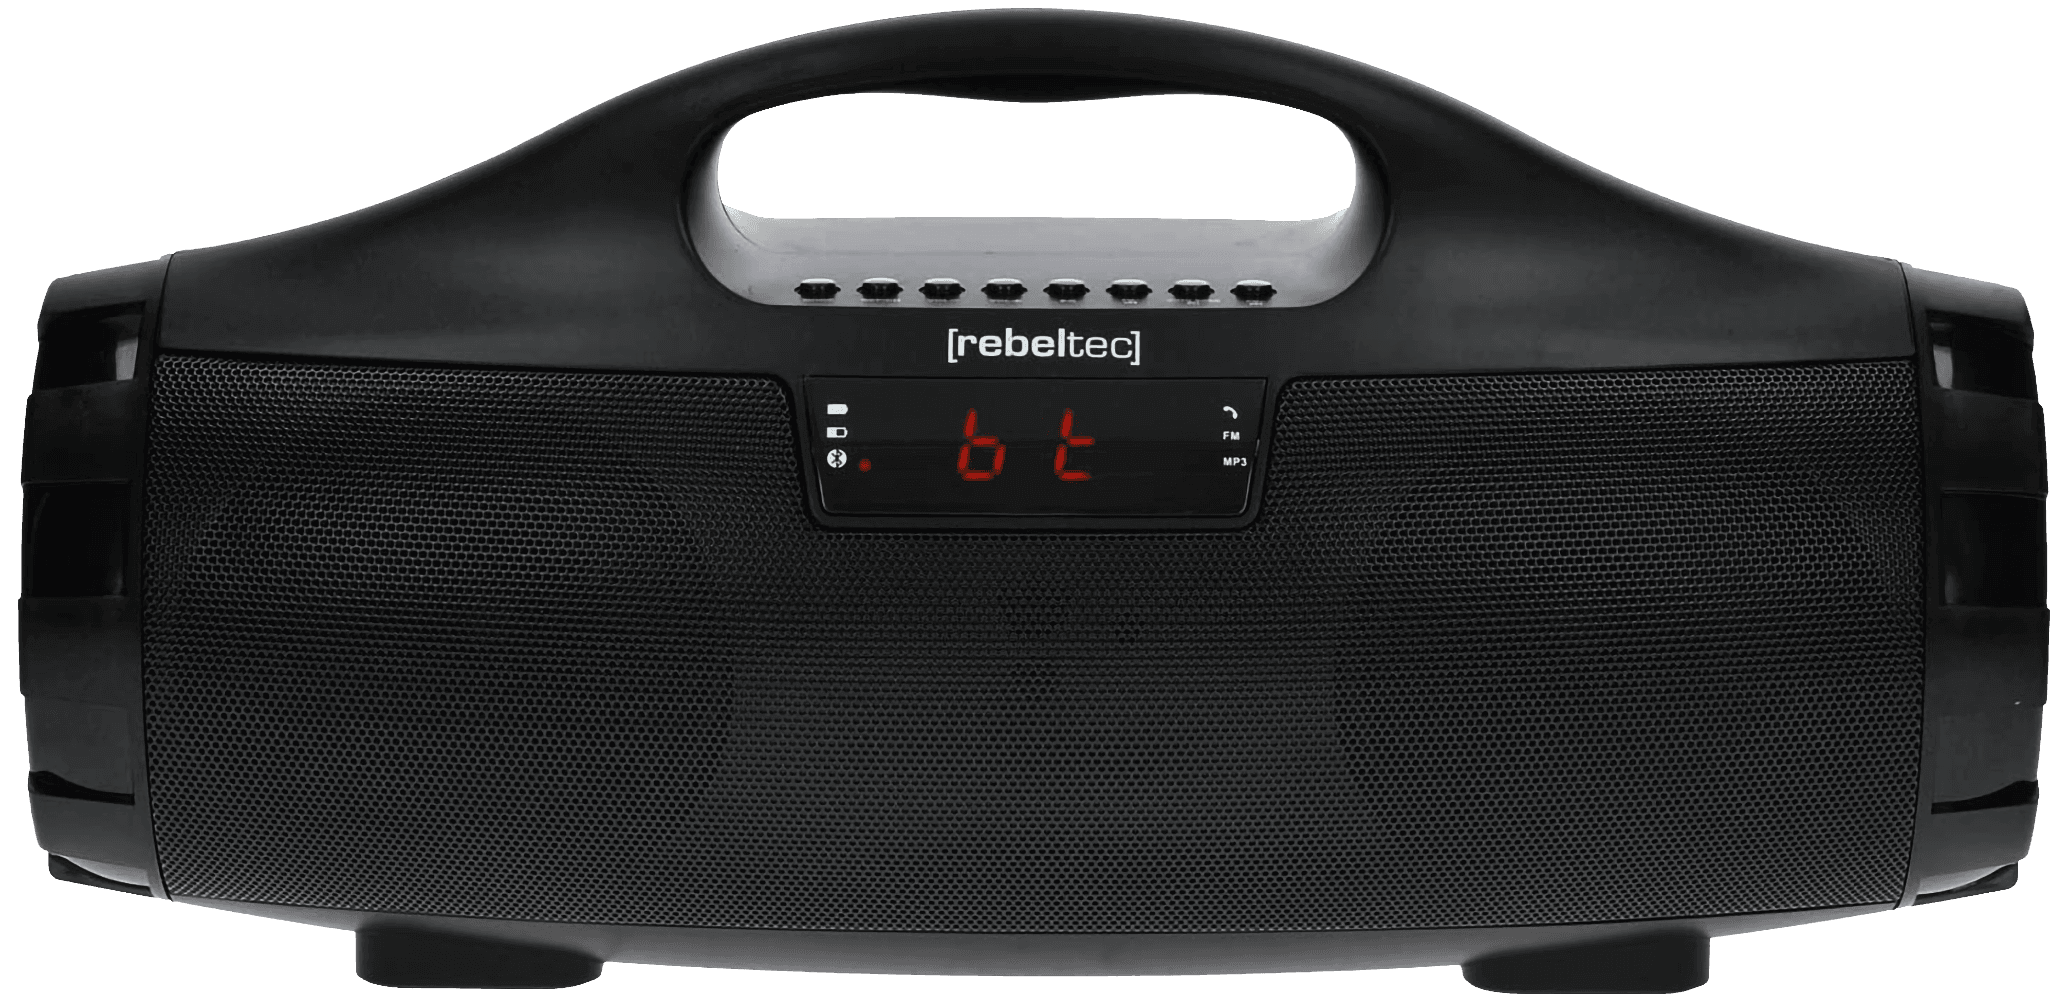 Motorola Moto X Play kompatibilis bluetooth hangszóró Rebeltec Soundbox 390 fekete